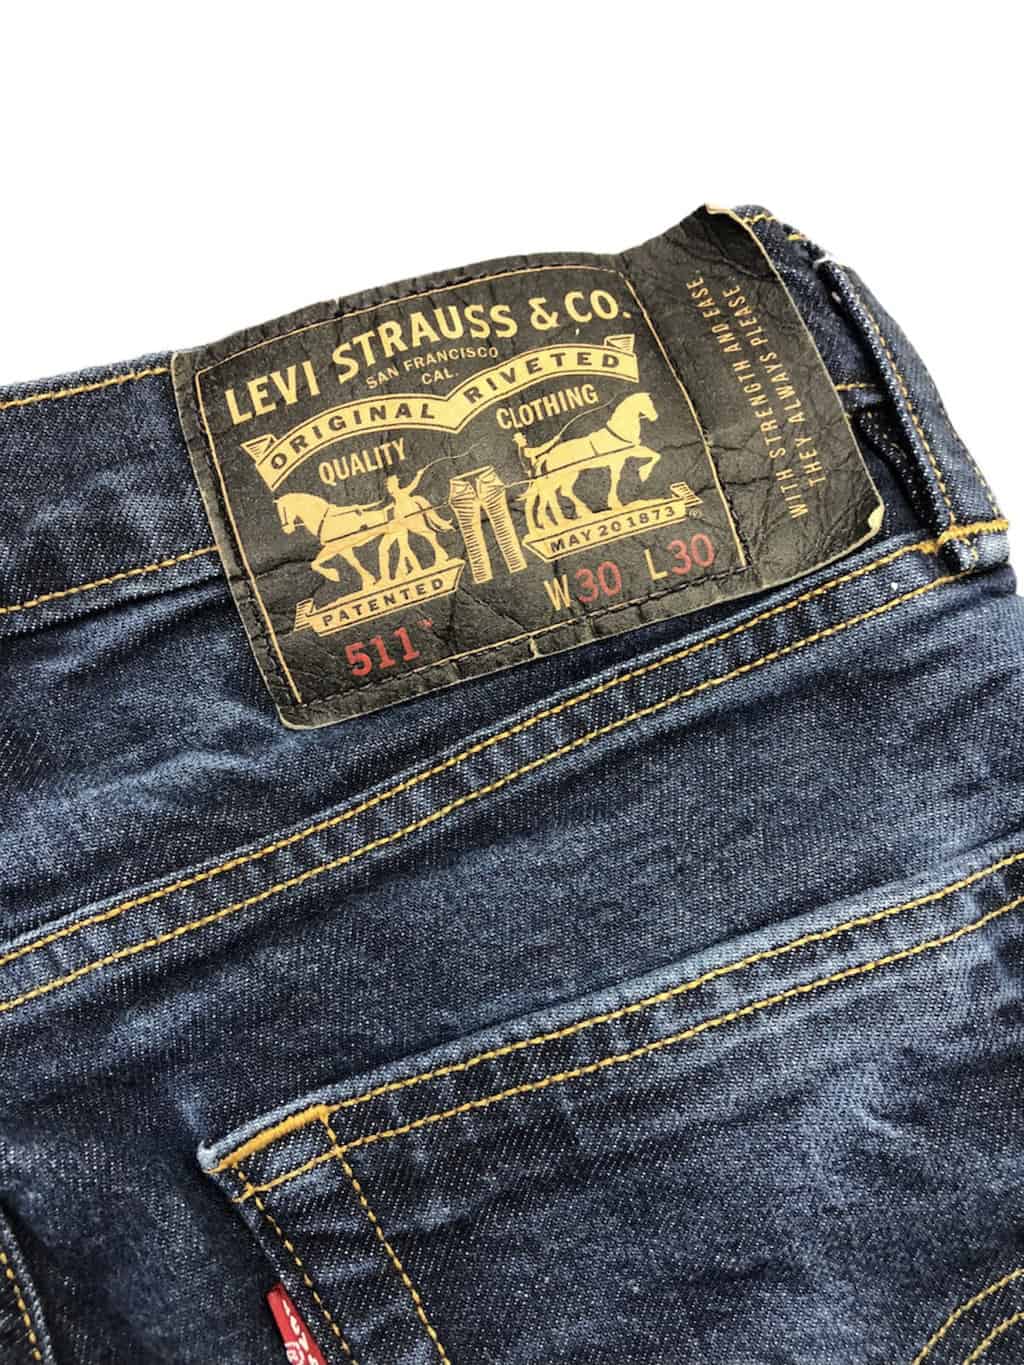 Levis 511 dark blue skateboarding jeans with reinforced stitching & red  details - W29 x  - St Cyr Vintage